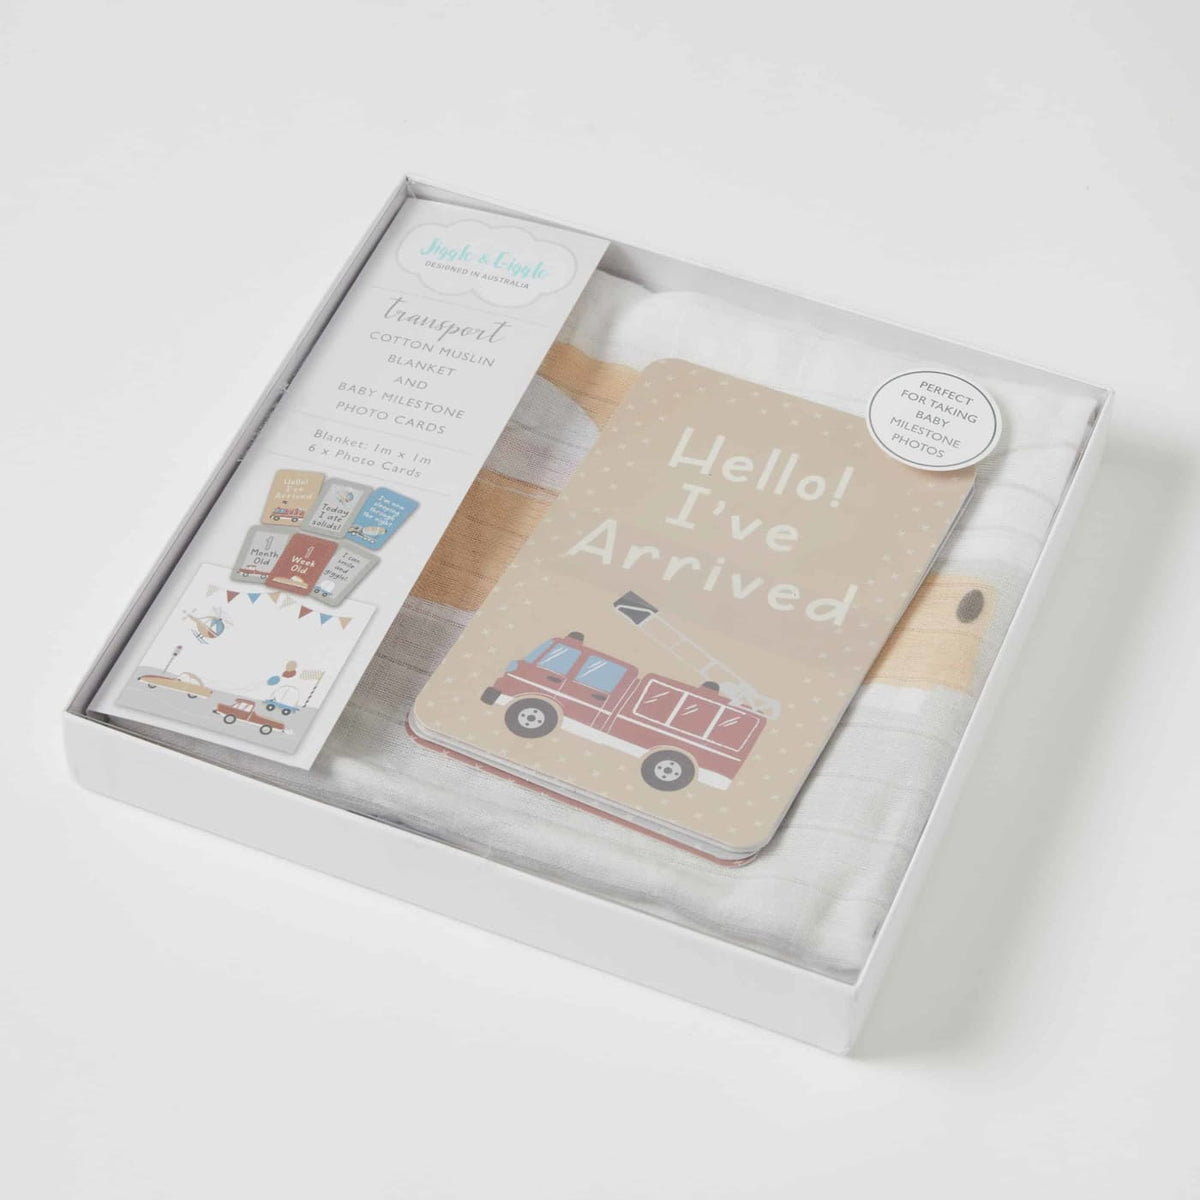 Jiggle &amp; Giggle Cotton Muslin Blanket and Baby Milestone Photo Cards Set - Transport - Transport - NURSERY &amp; BEDTIME - SWADDLES/WRAPS